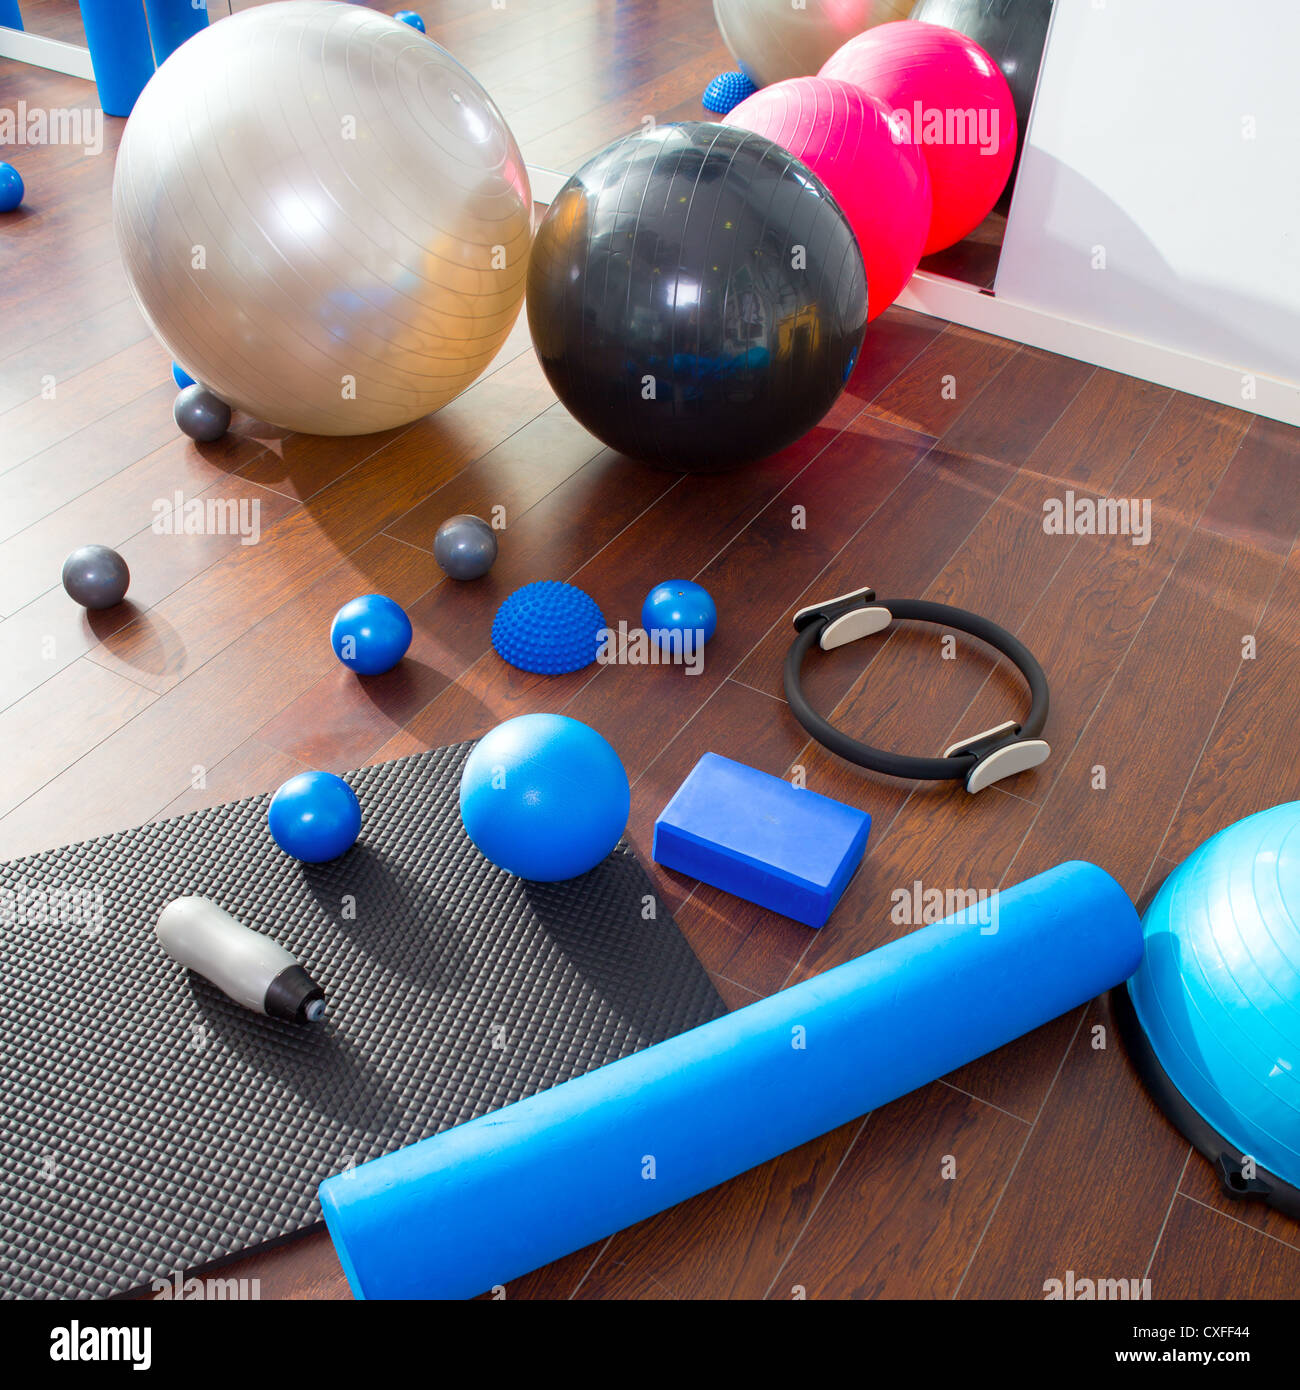 Aerobic Pilates stuff like mat balls roller magic ring rubber bands on wooden floor Stock Photo